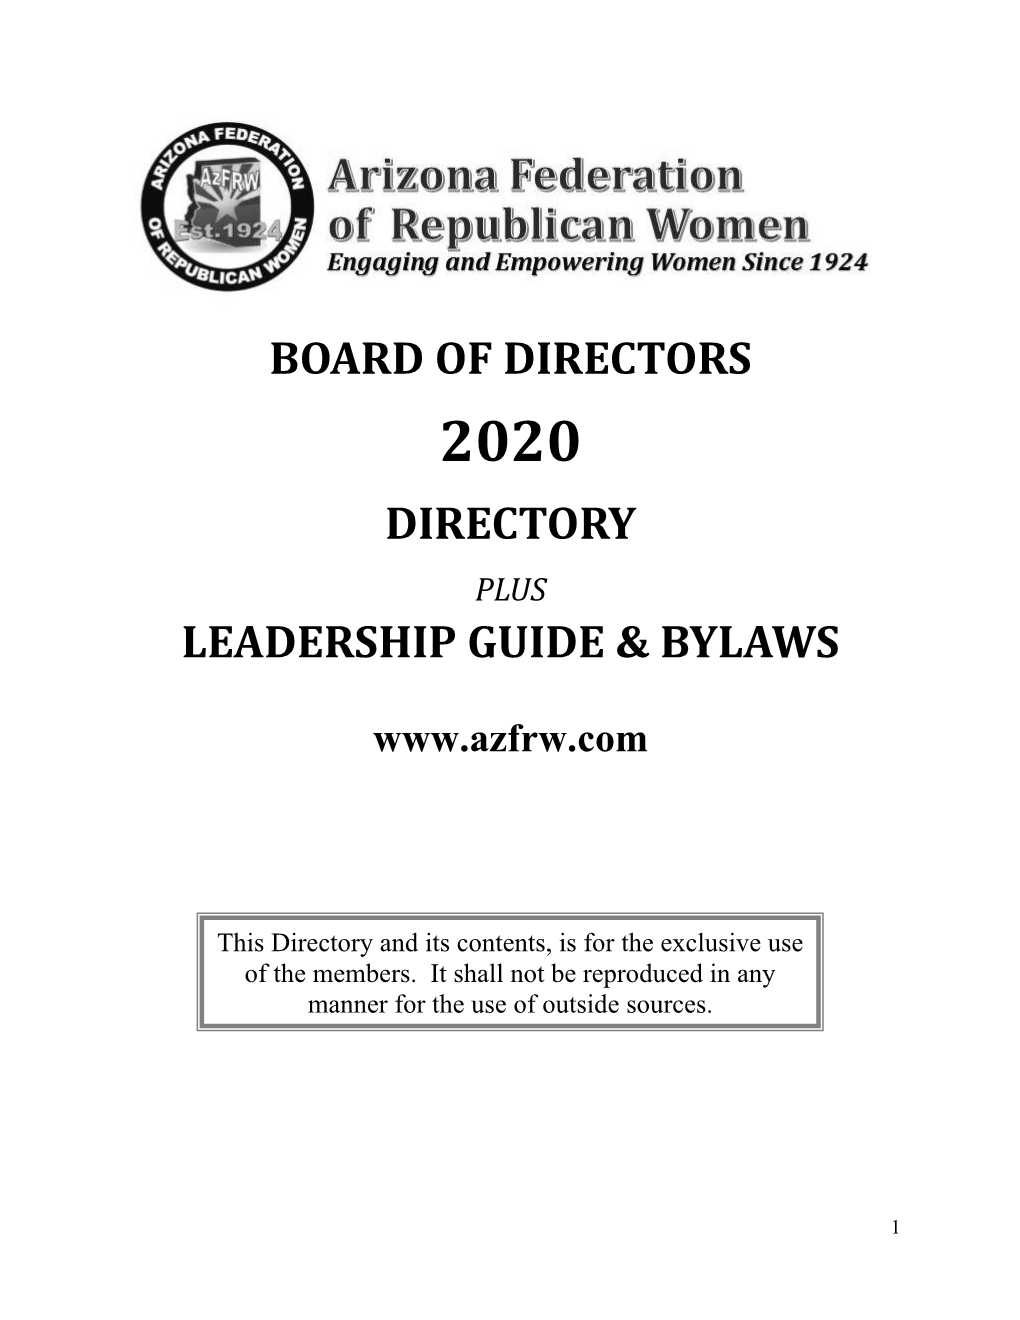 Board of Directors 2020 Directory